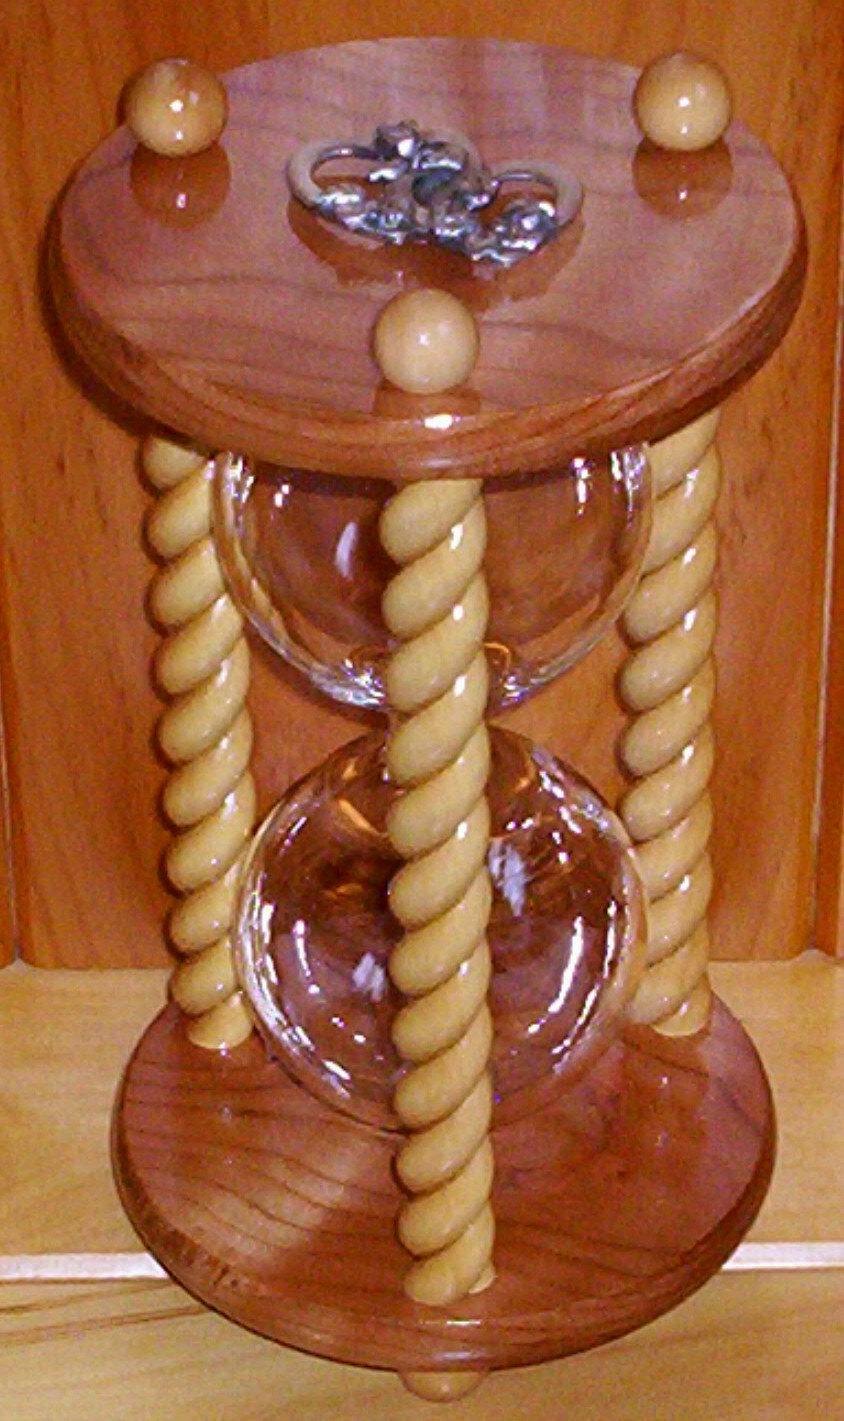 Wedding - Unity Hourglass - The Honeymoon Cherry and Maple Wedding Unity Sand Ceremony Hourglass by Heirloom Hourglass - The Original Unity Hourglass